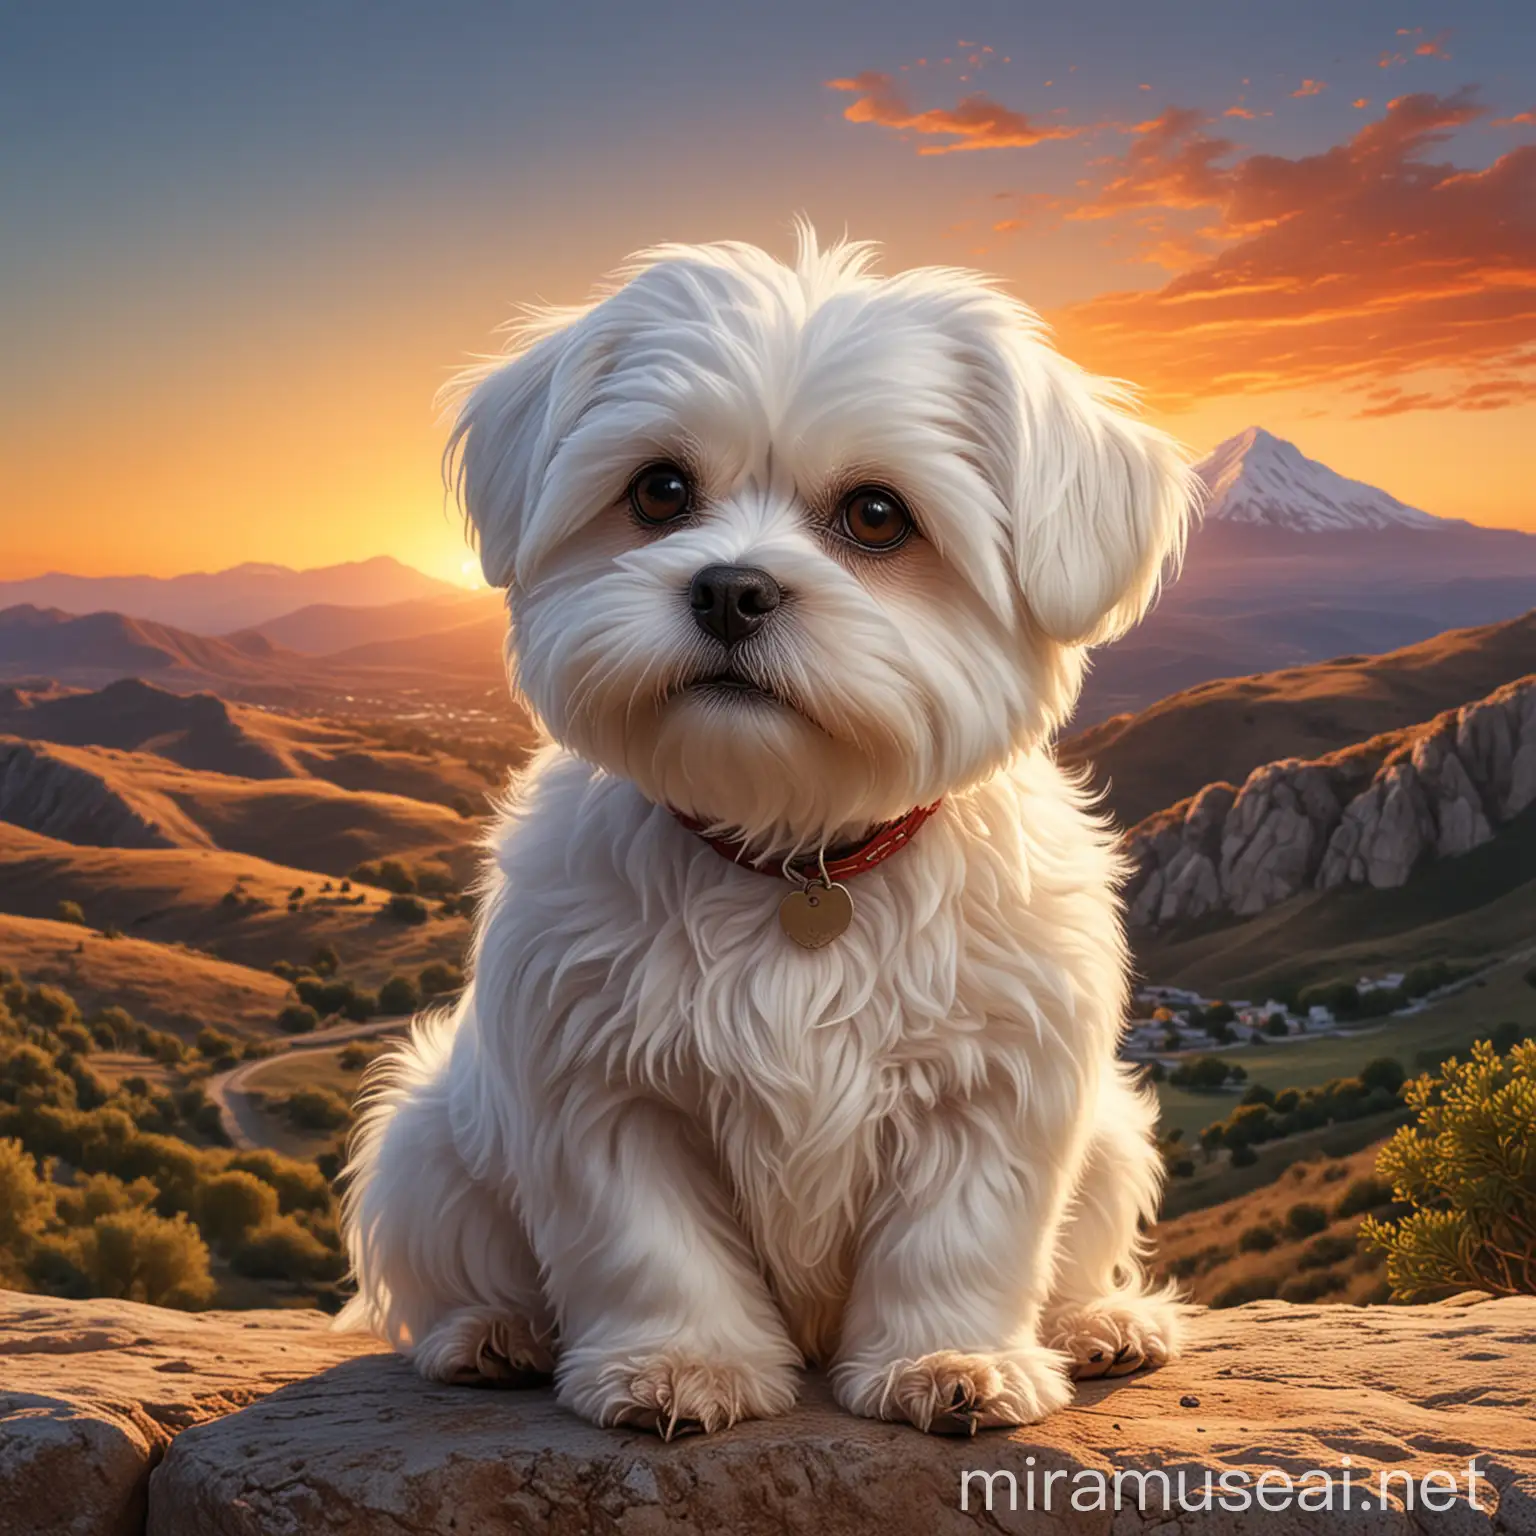 Maltese Dog Admiring Sunset Mountain View in Hyperrealistic Art